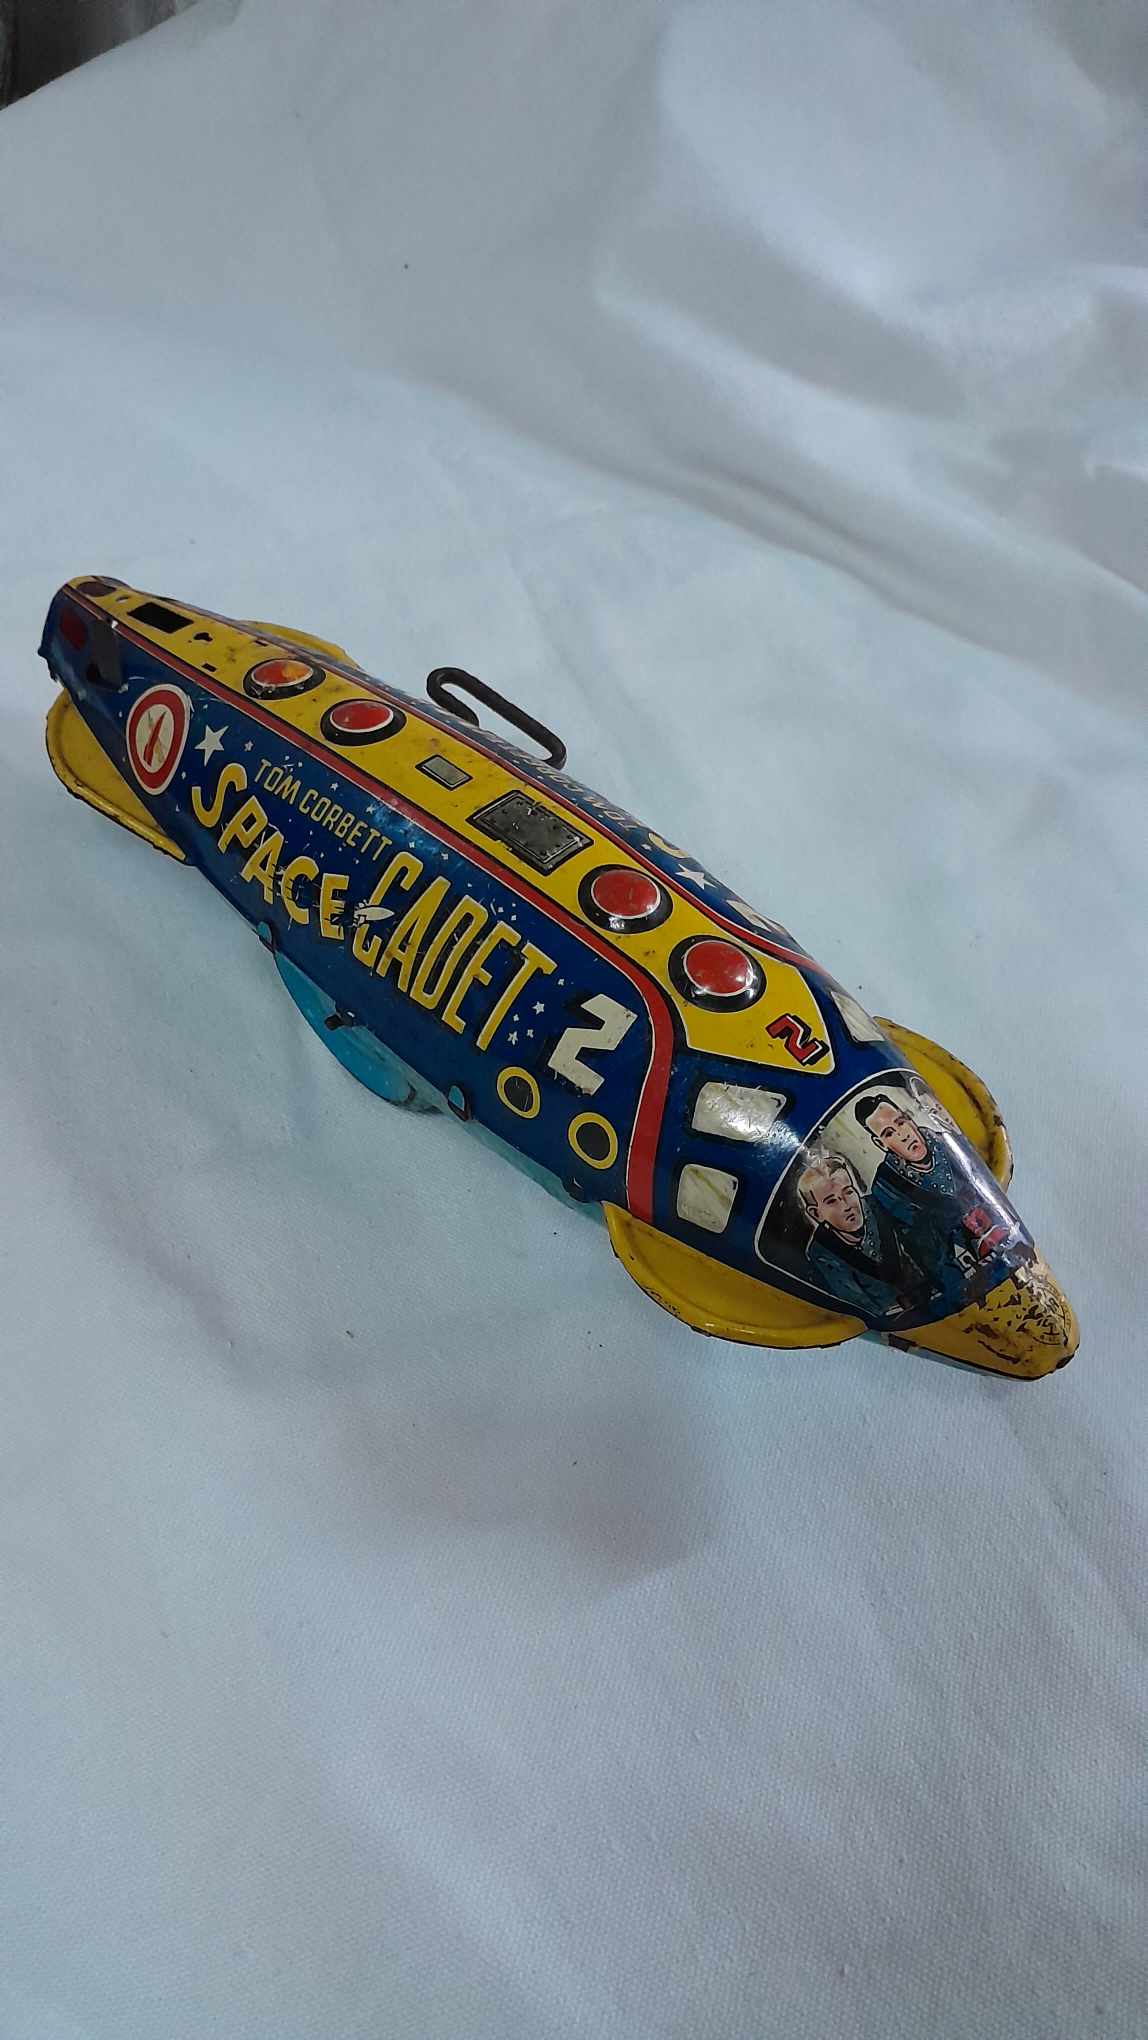 Vintage Tom Corbett Space Cadet Tin Toy